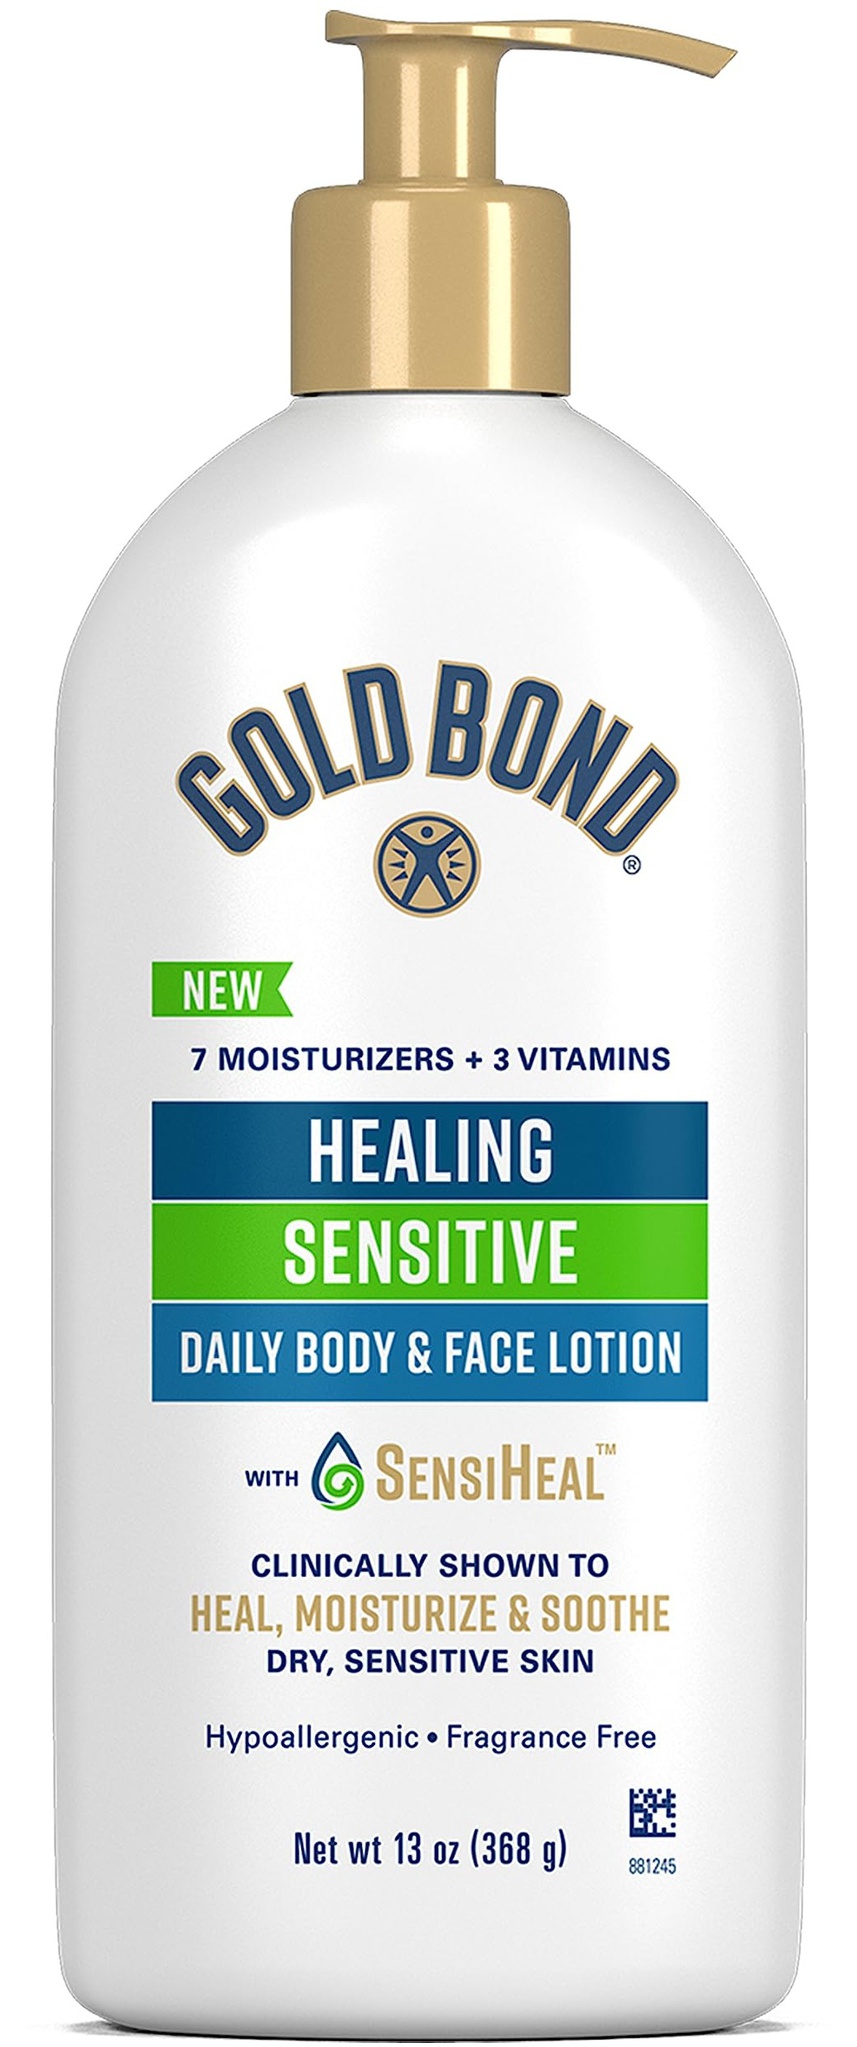 Gold Bond Healing Sensitive Daily Body & Face Lotion